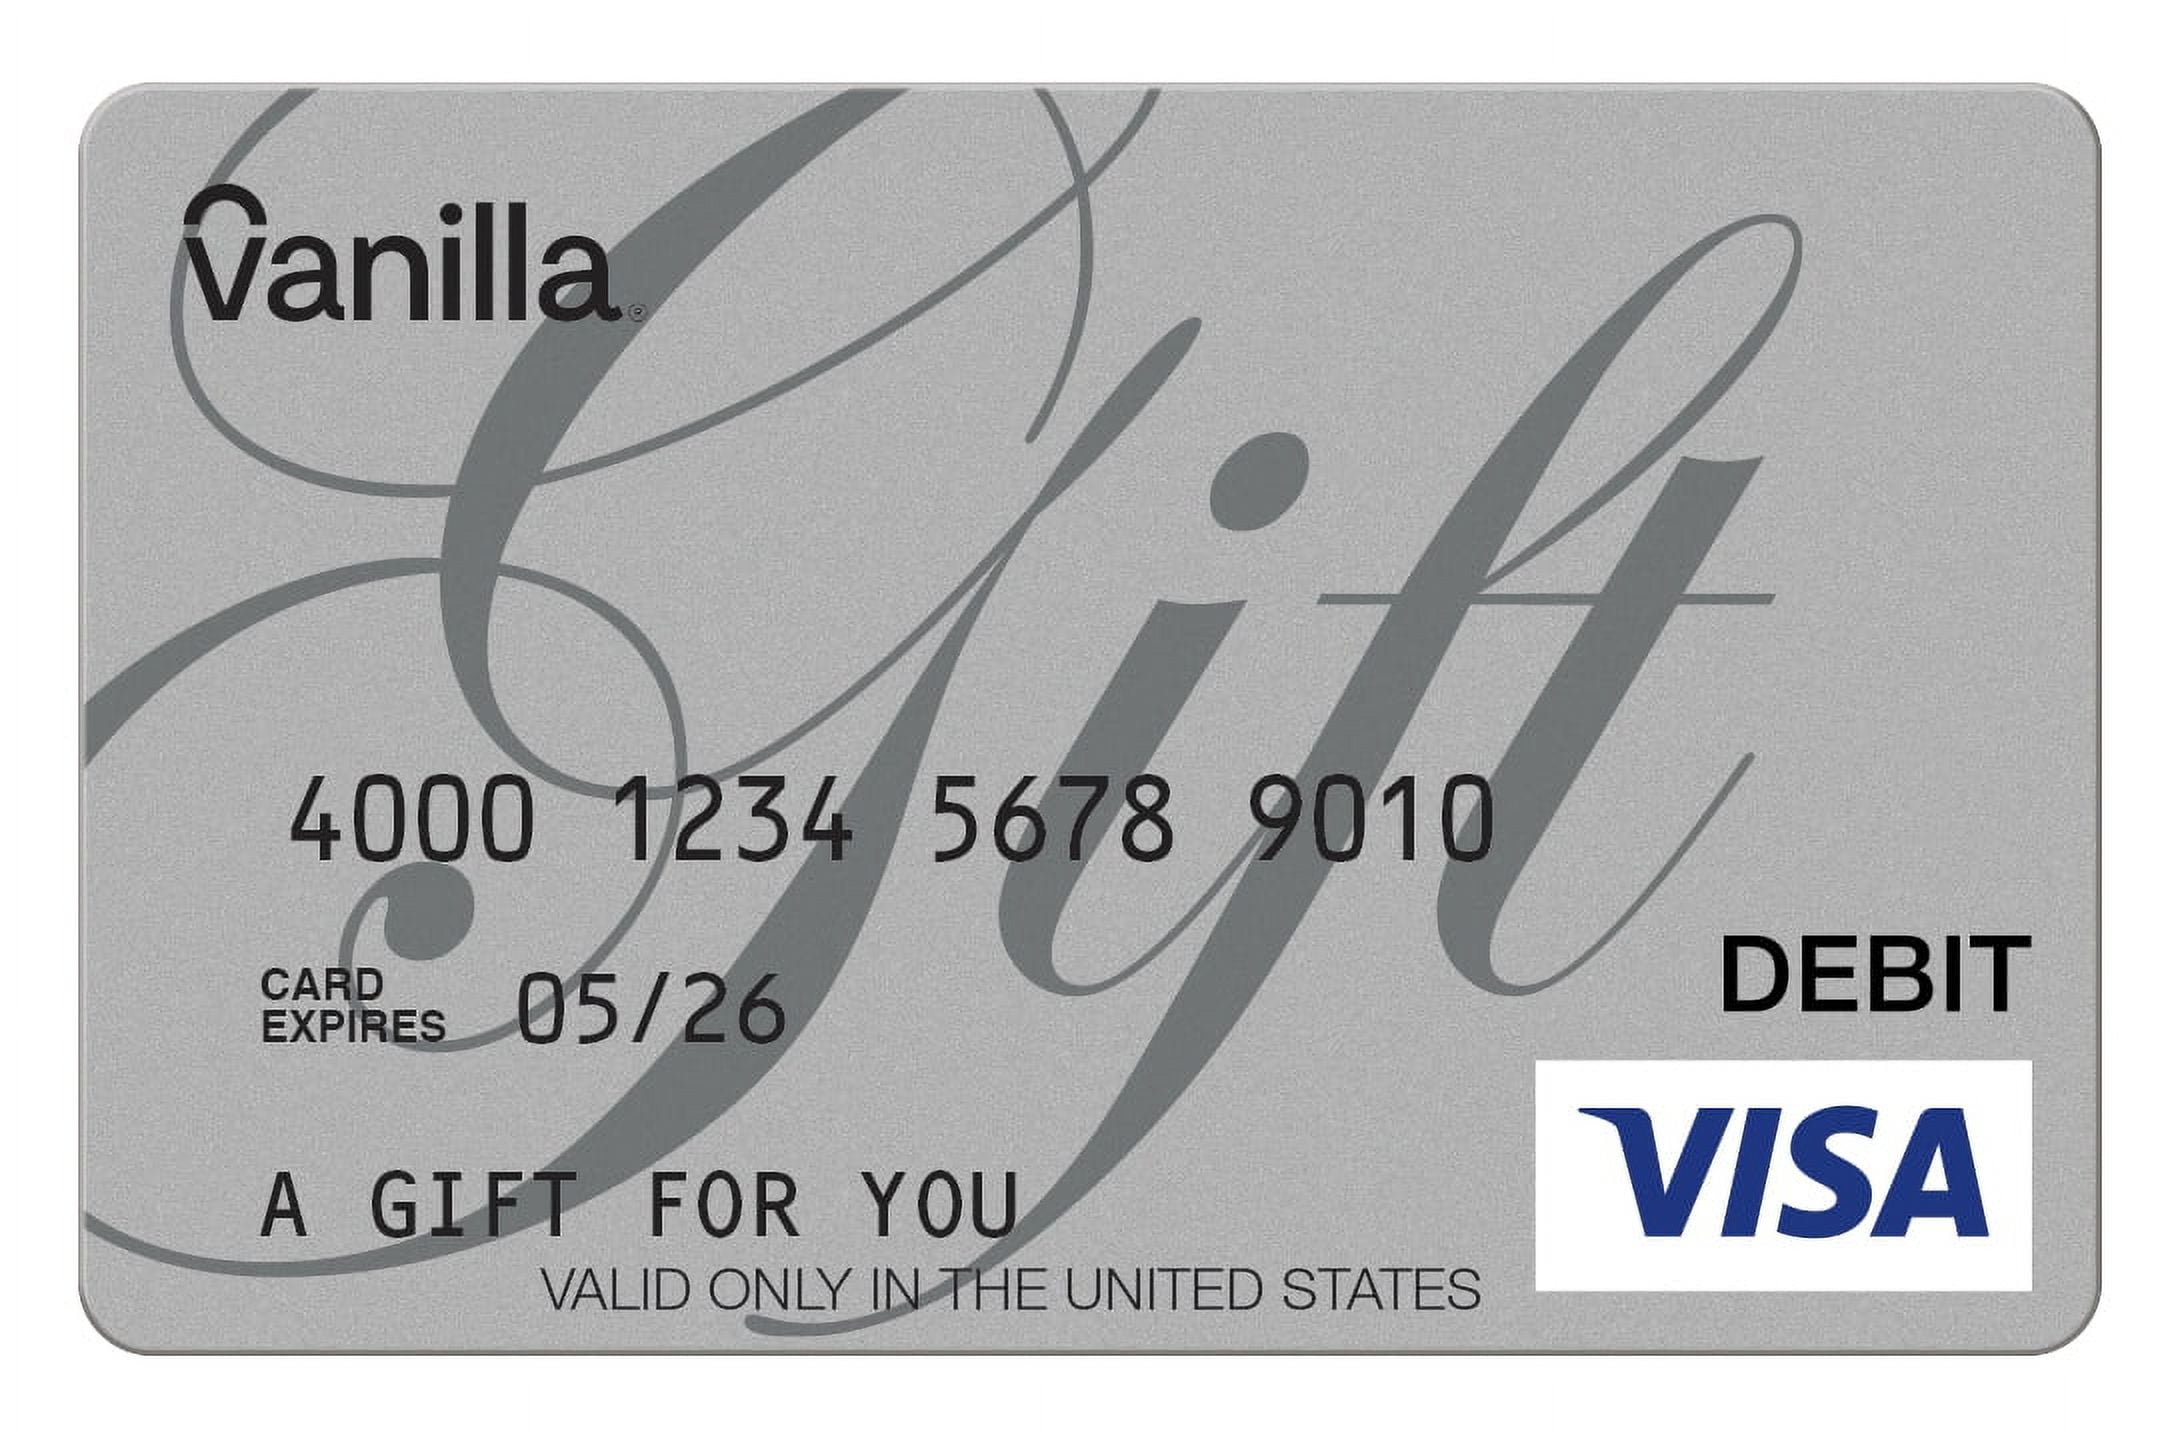 Visa Multipack (3 $20 Gift Cards) + $8.50 Fee